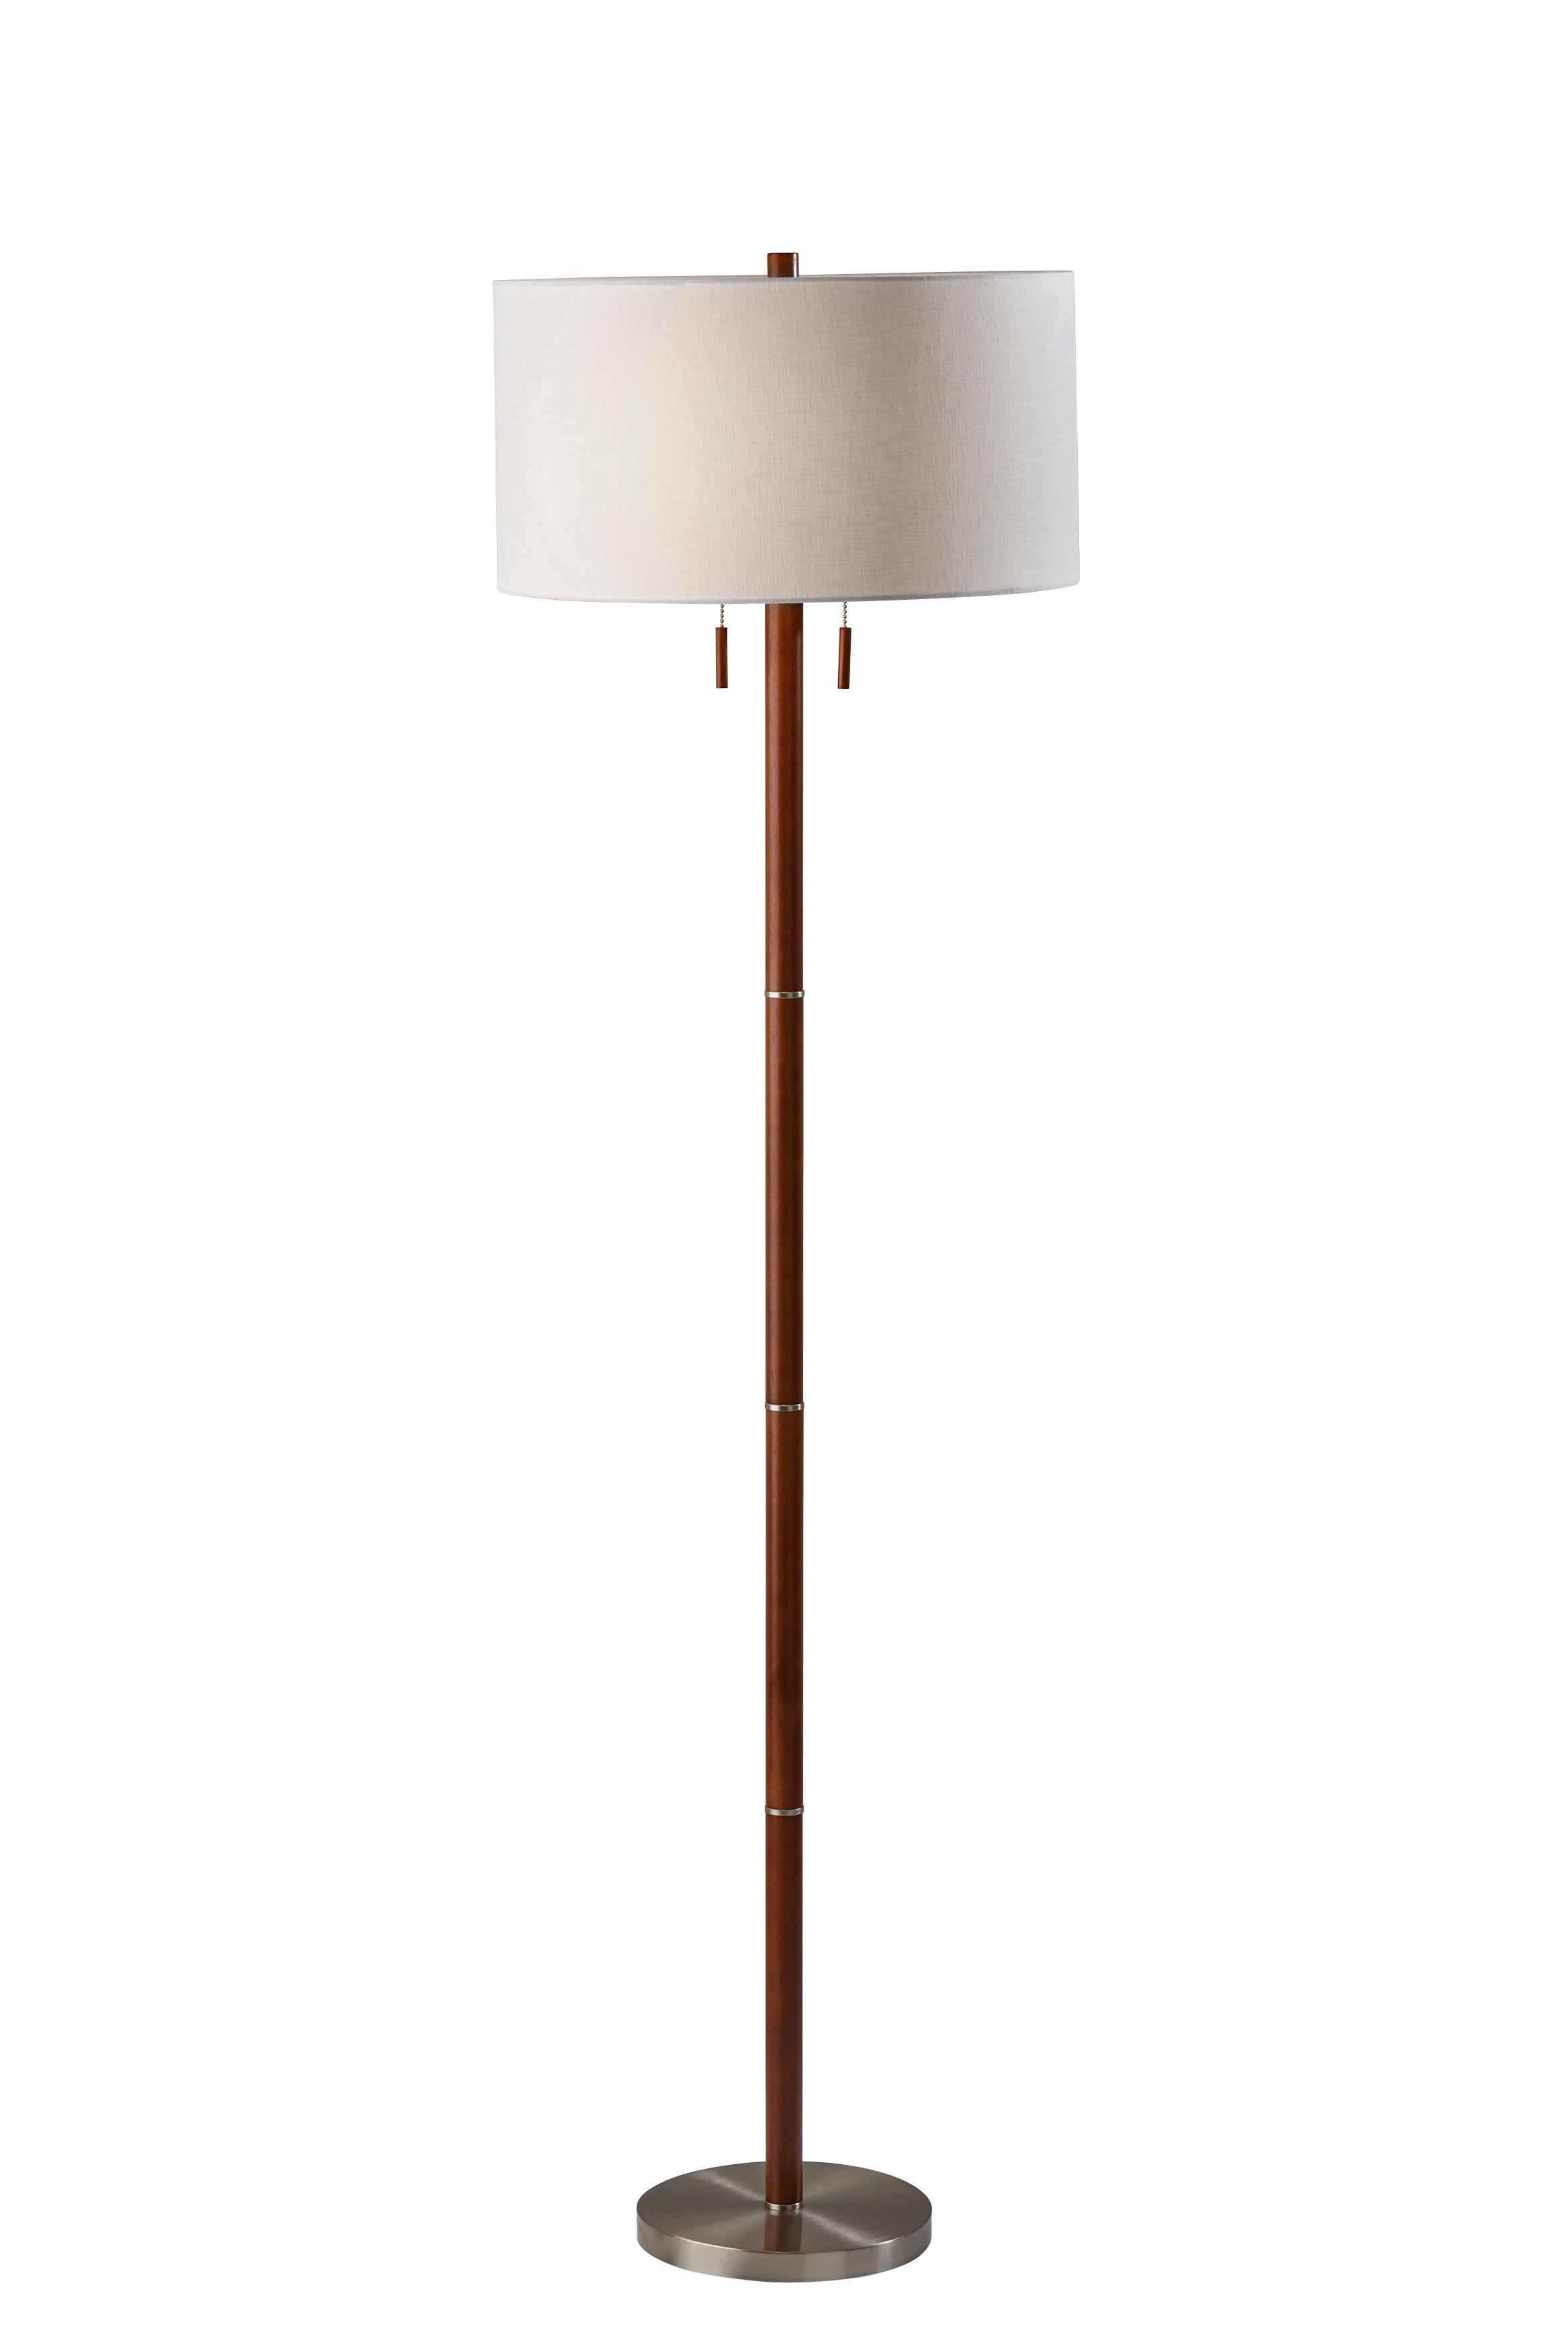 MADELINE Floor lamp Wood, Stainless steel - 3375-15 | ADESSO